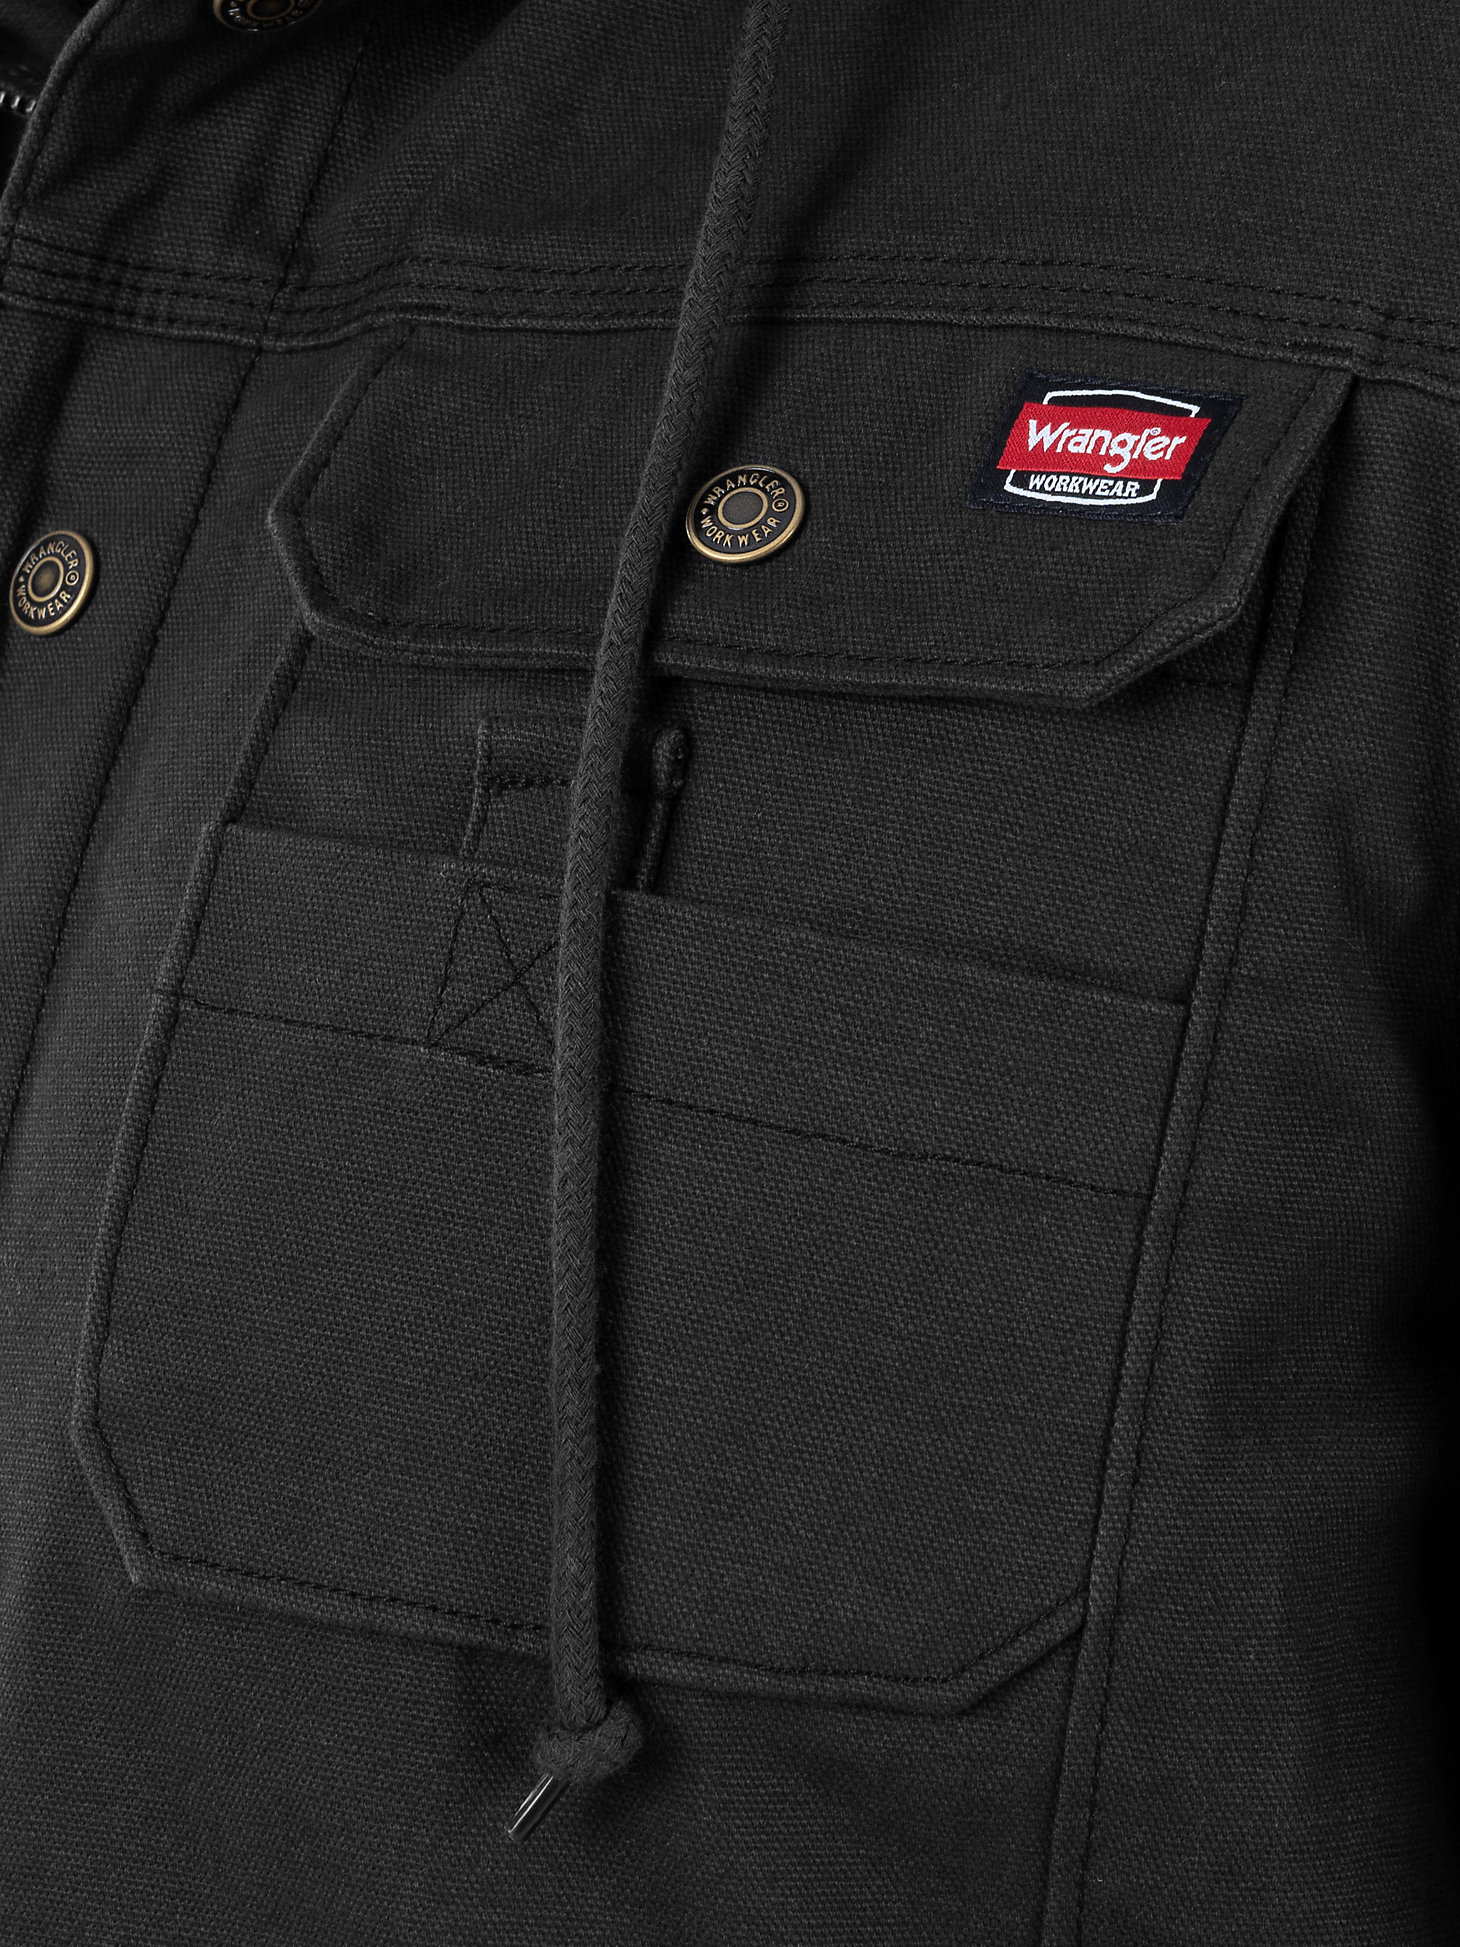 Wrangler® Workwear Sherpa Lined Shirt Jacket in Black alternative view 3